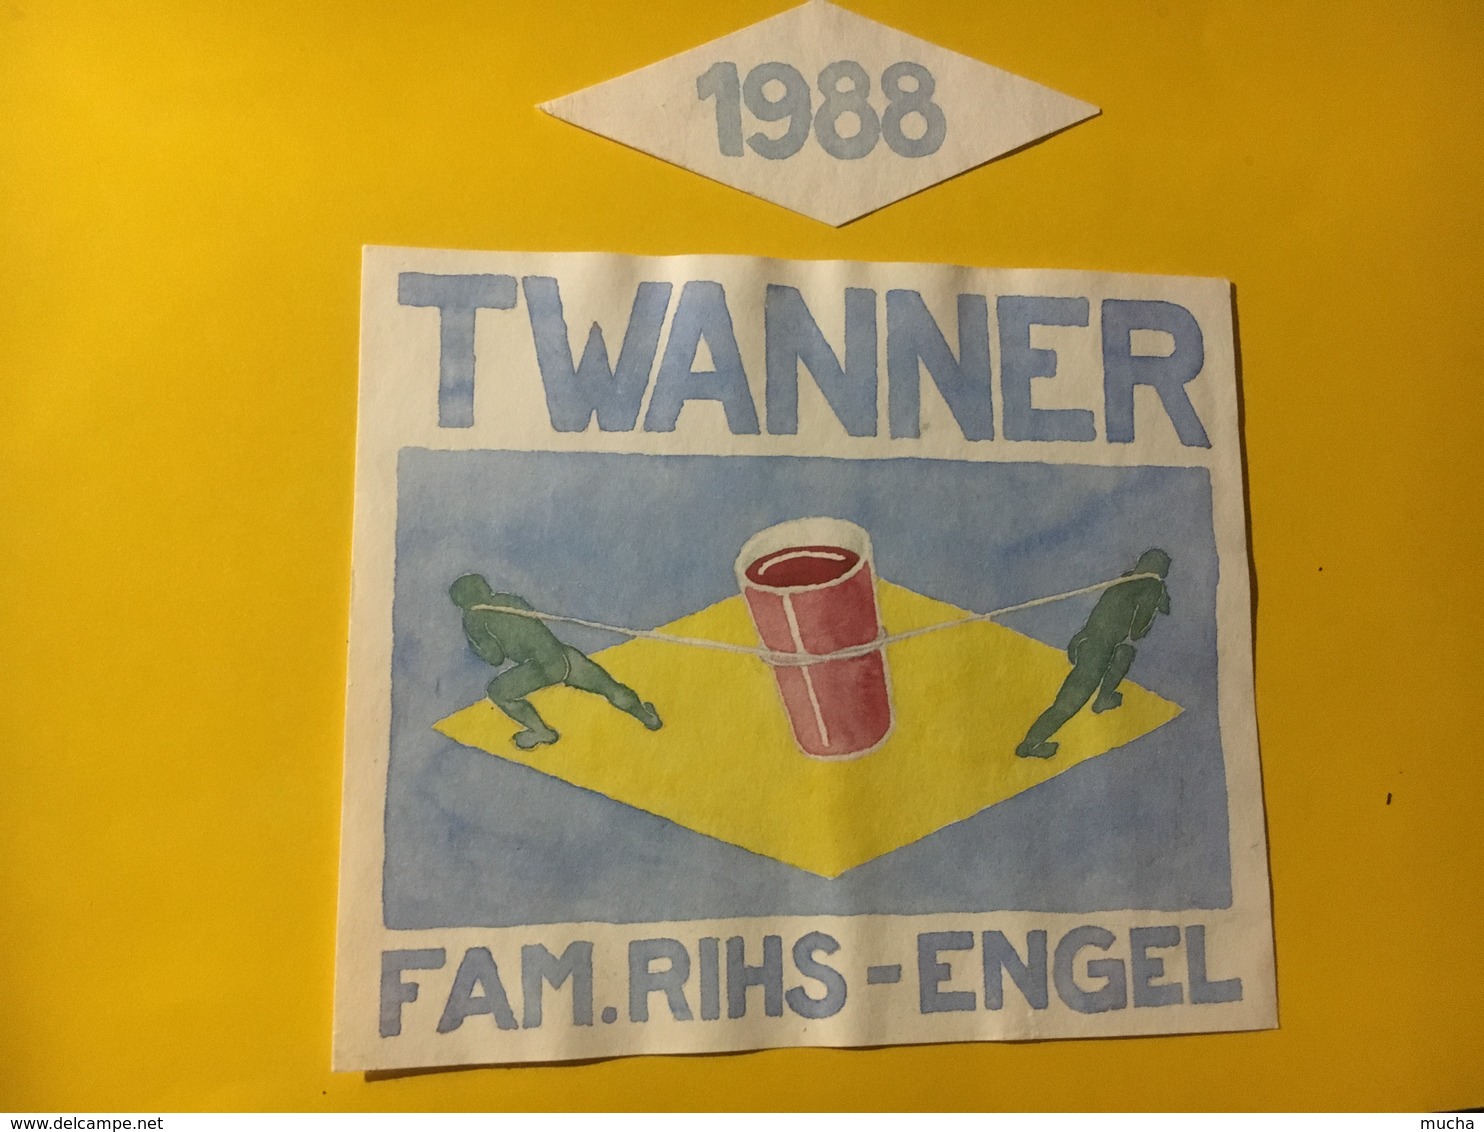 7947 - Twanner 1988 Fam, Rihs-Engel Suisse - Kunst